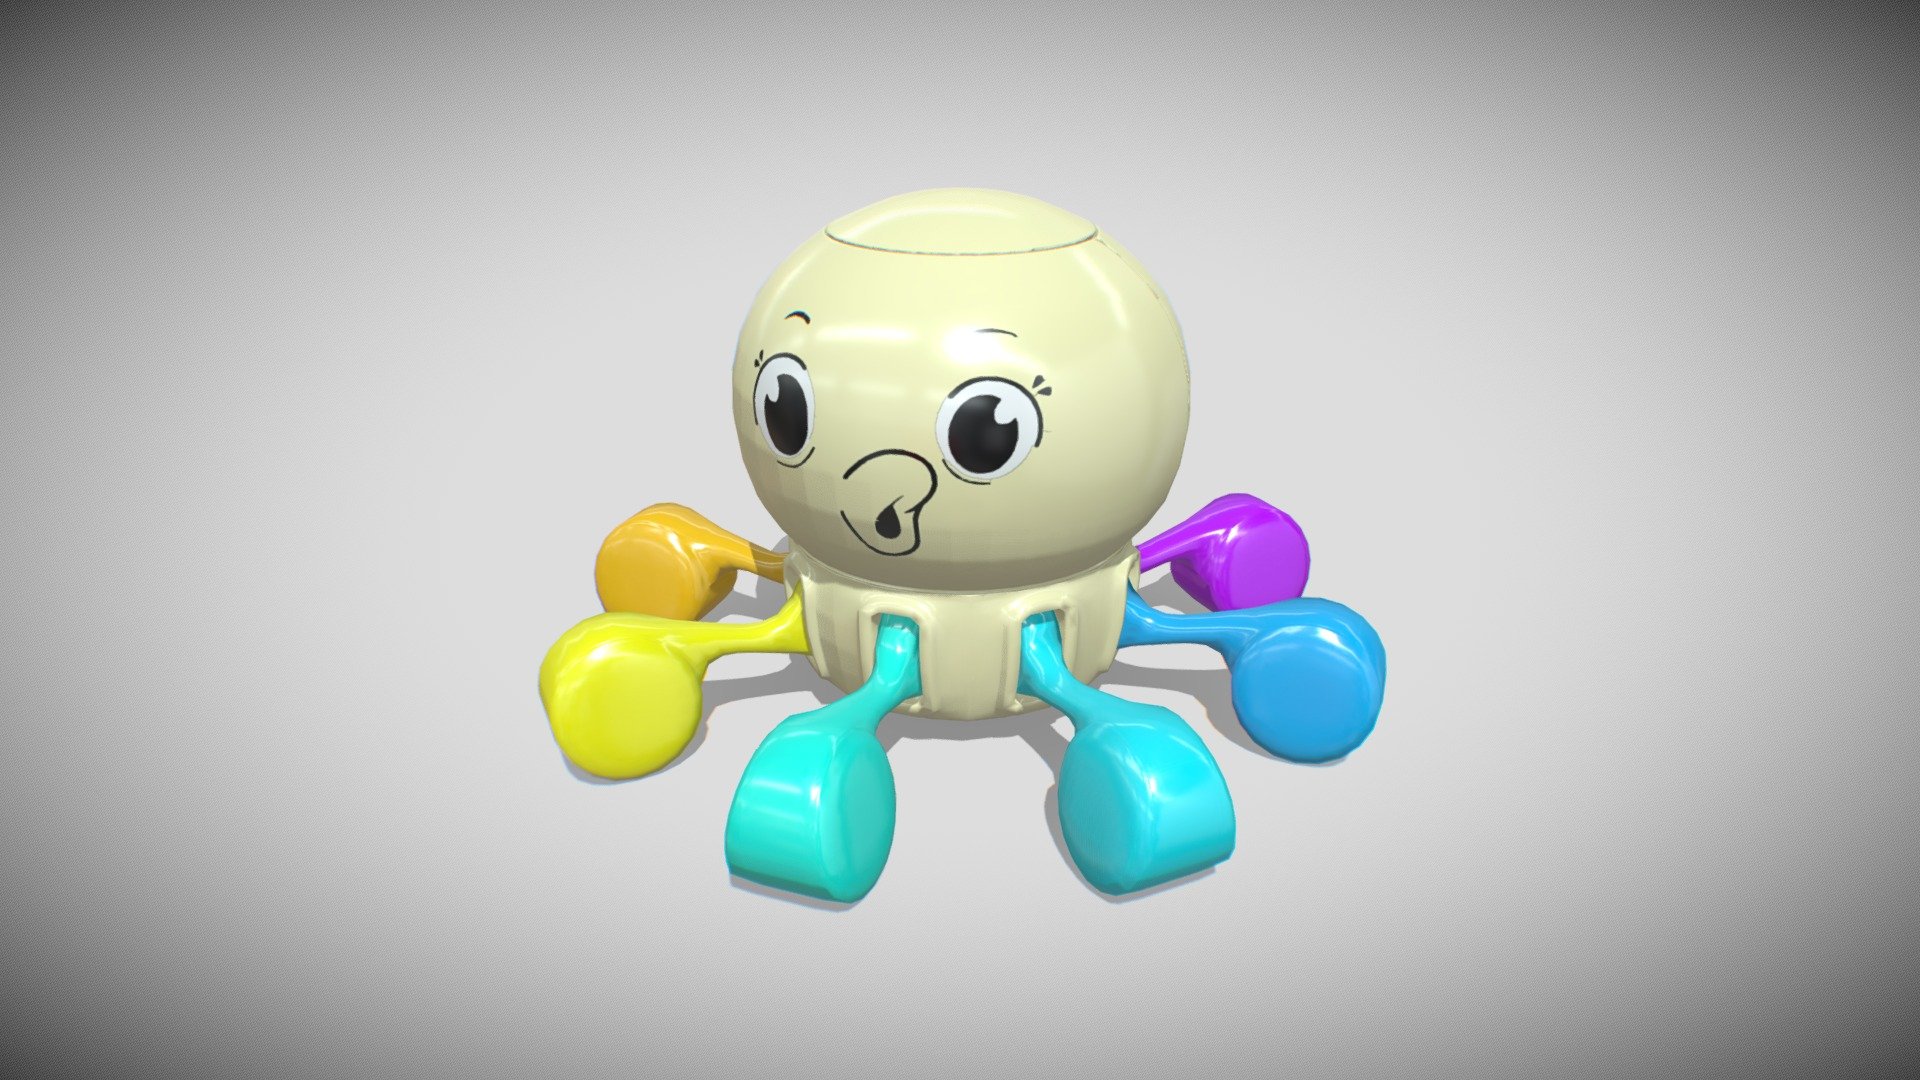 3d model of the octopus toy - Octopus Toy - 3D model by djkorg 3d model